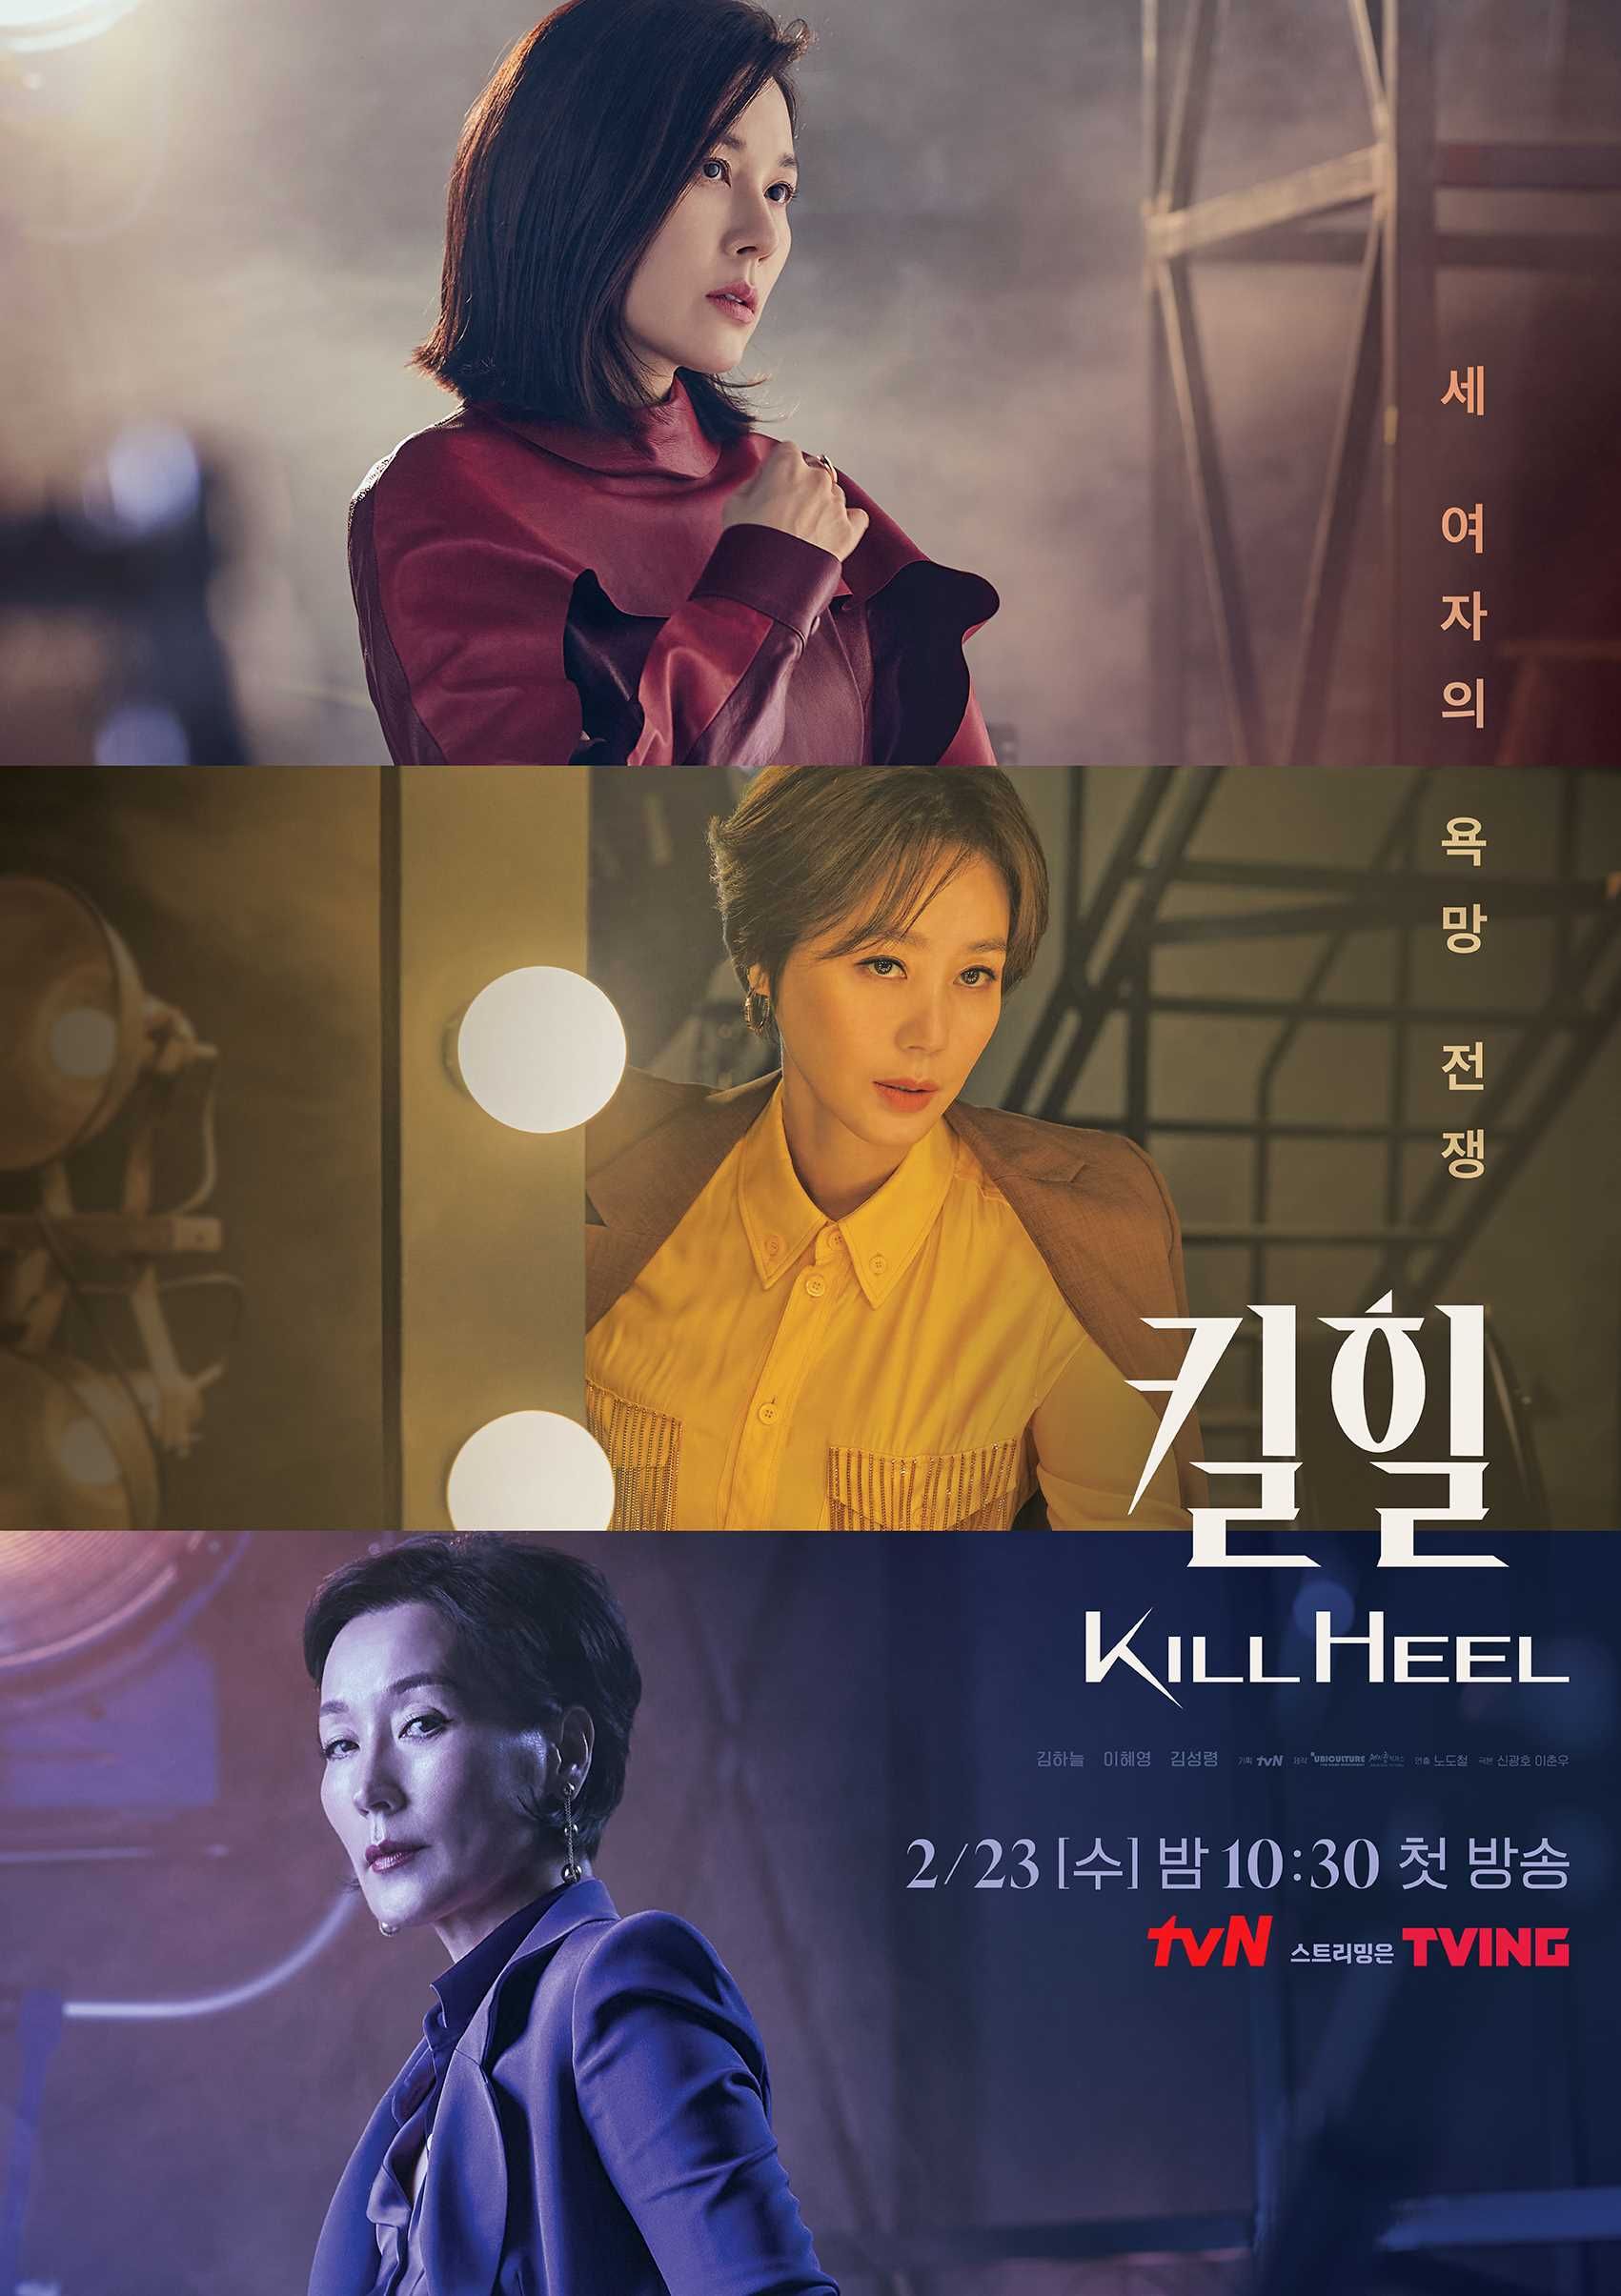 ▲《Kill Heel》是tvN電視台作品。（圖／翻攝自《Kill Heel》官網）